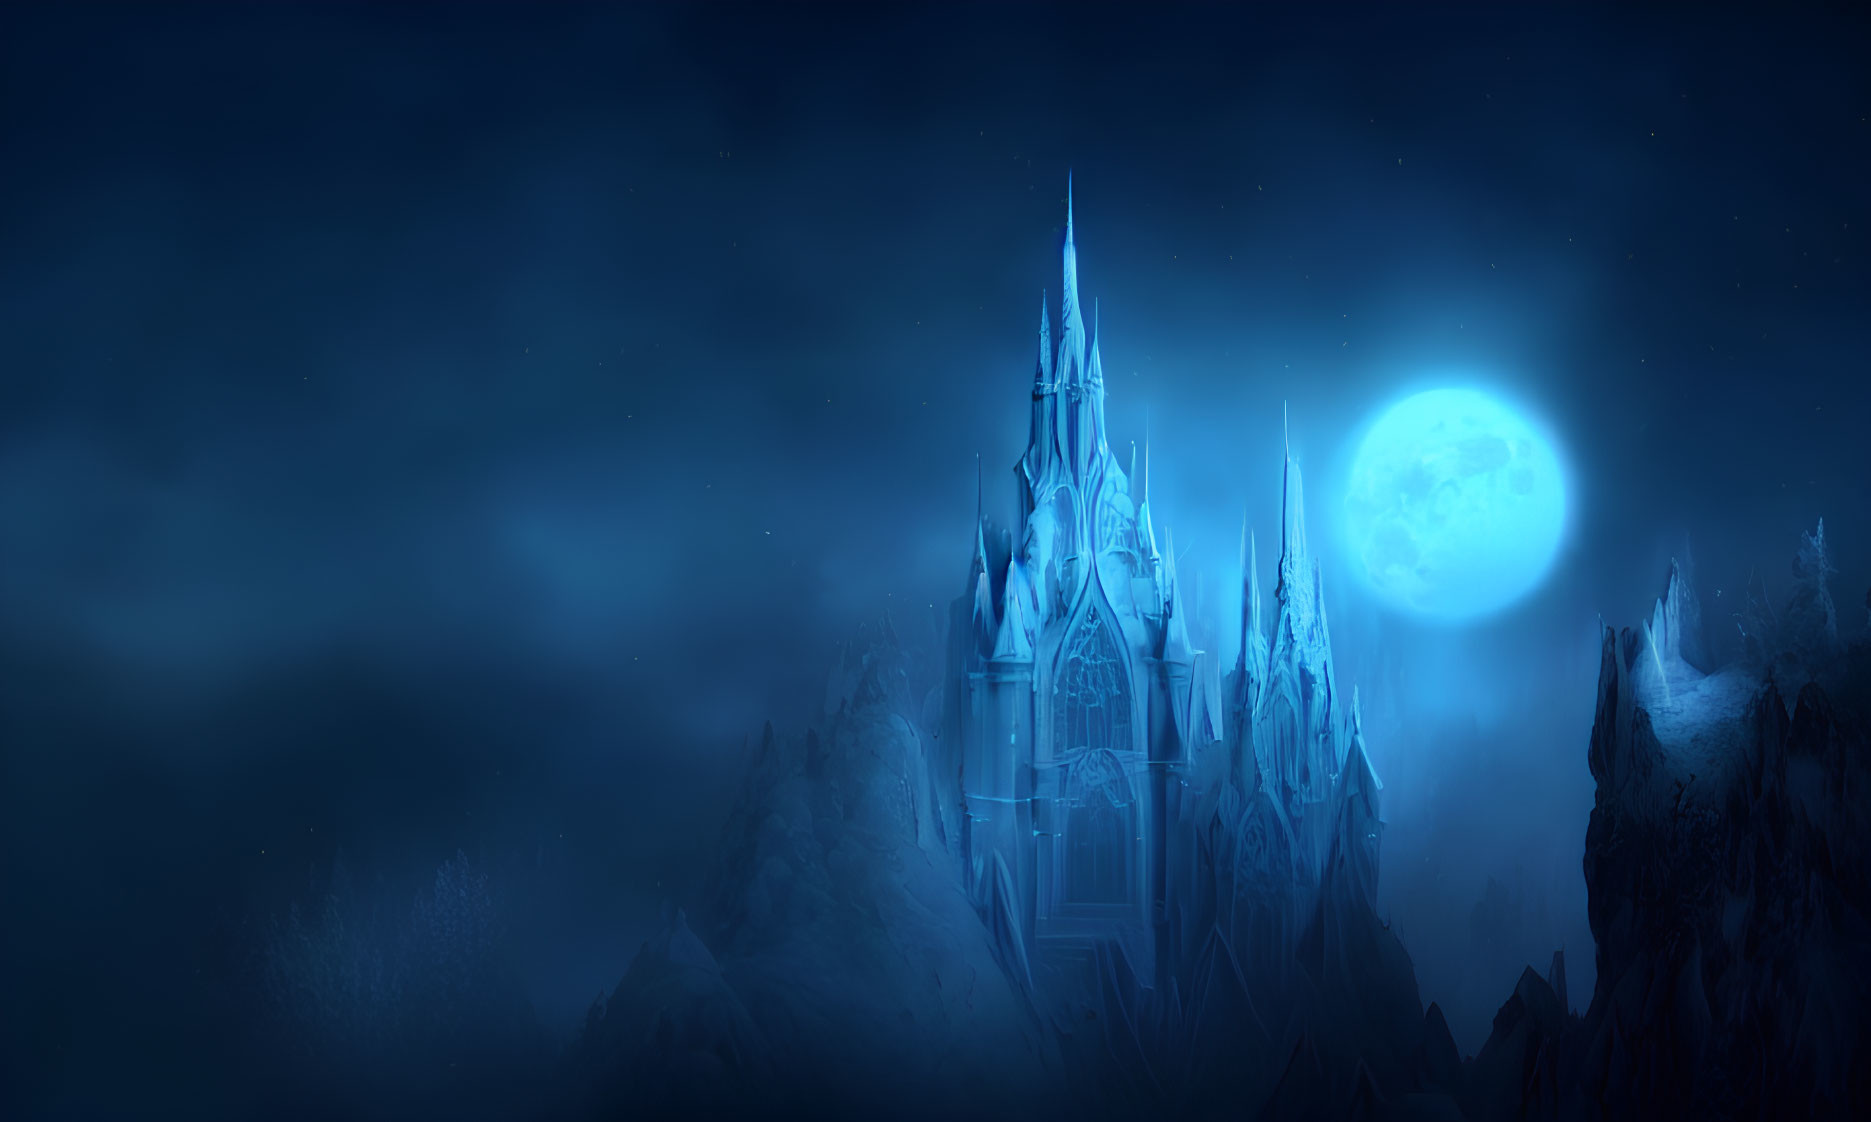 Enchanting ice castle under full moon in misty rocky setting